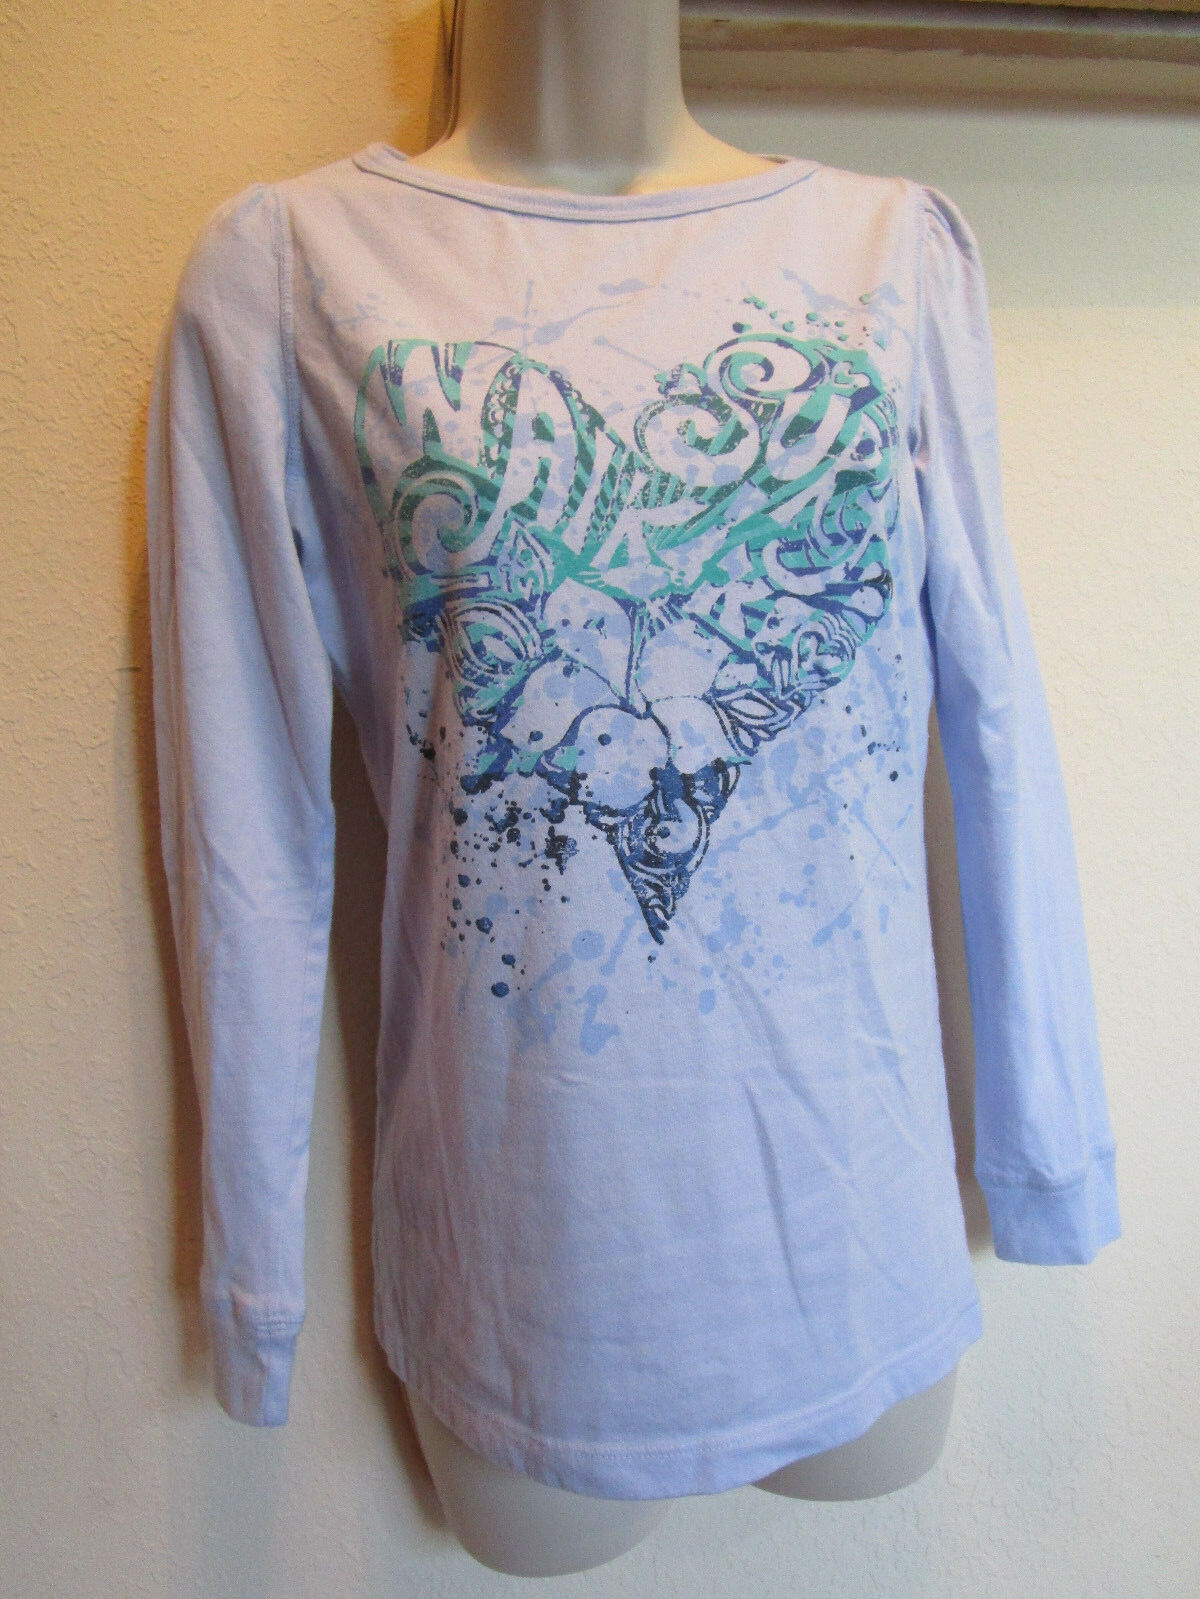 MOSSIMO Long Sleeve GIRLS XLG T Shirt - Waikiki Surf Heart Design, Light Blue - $6.51